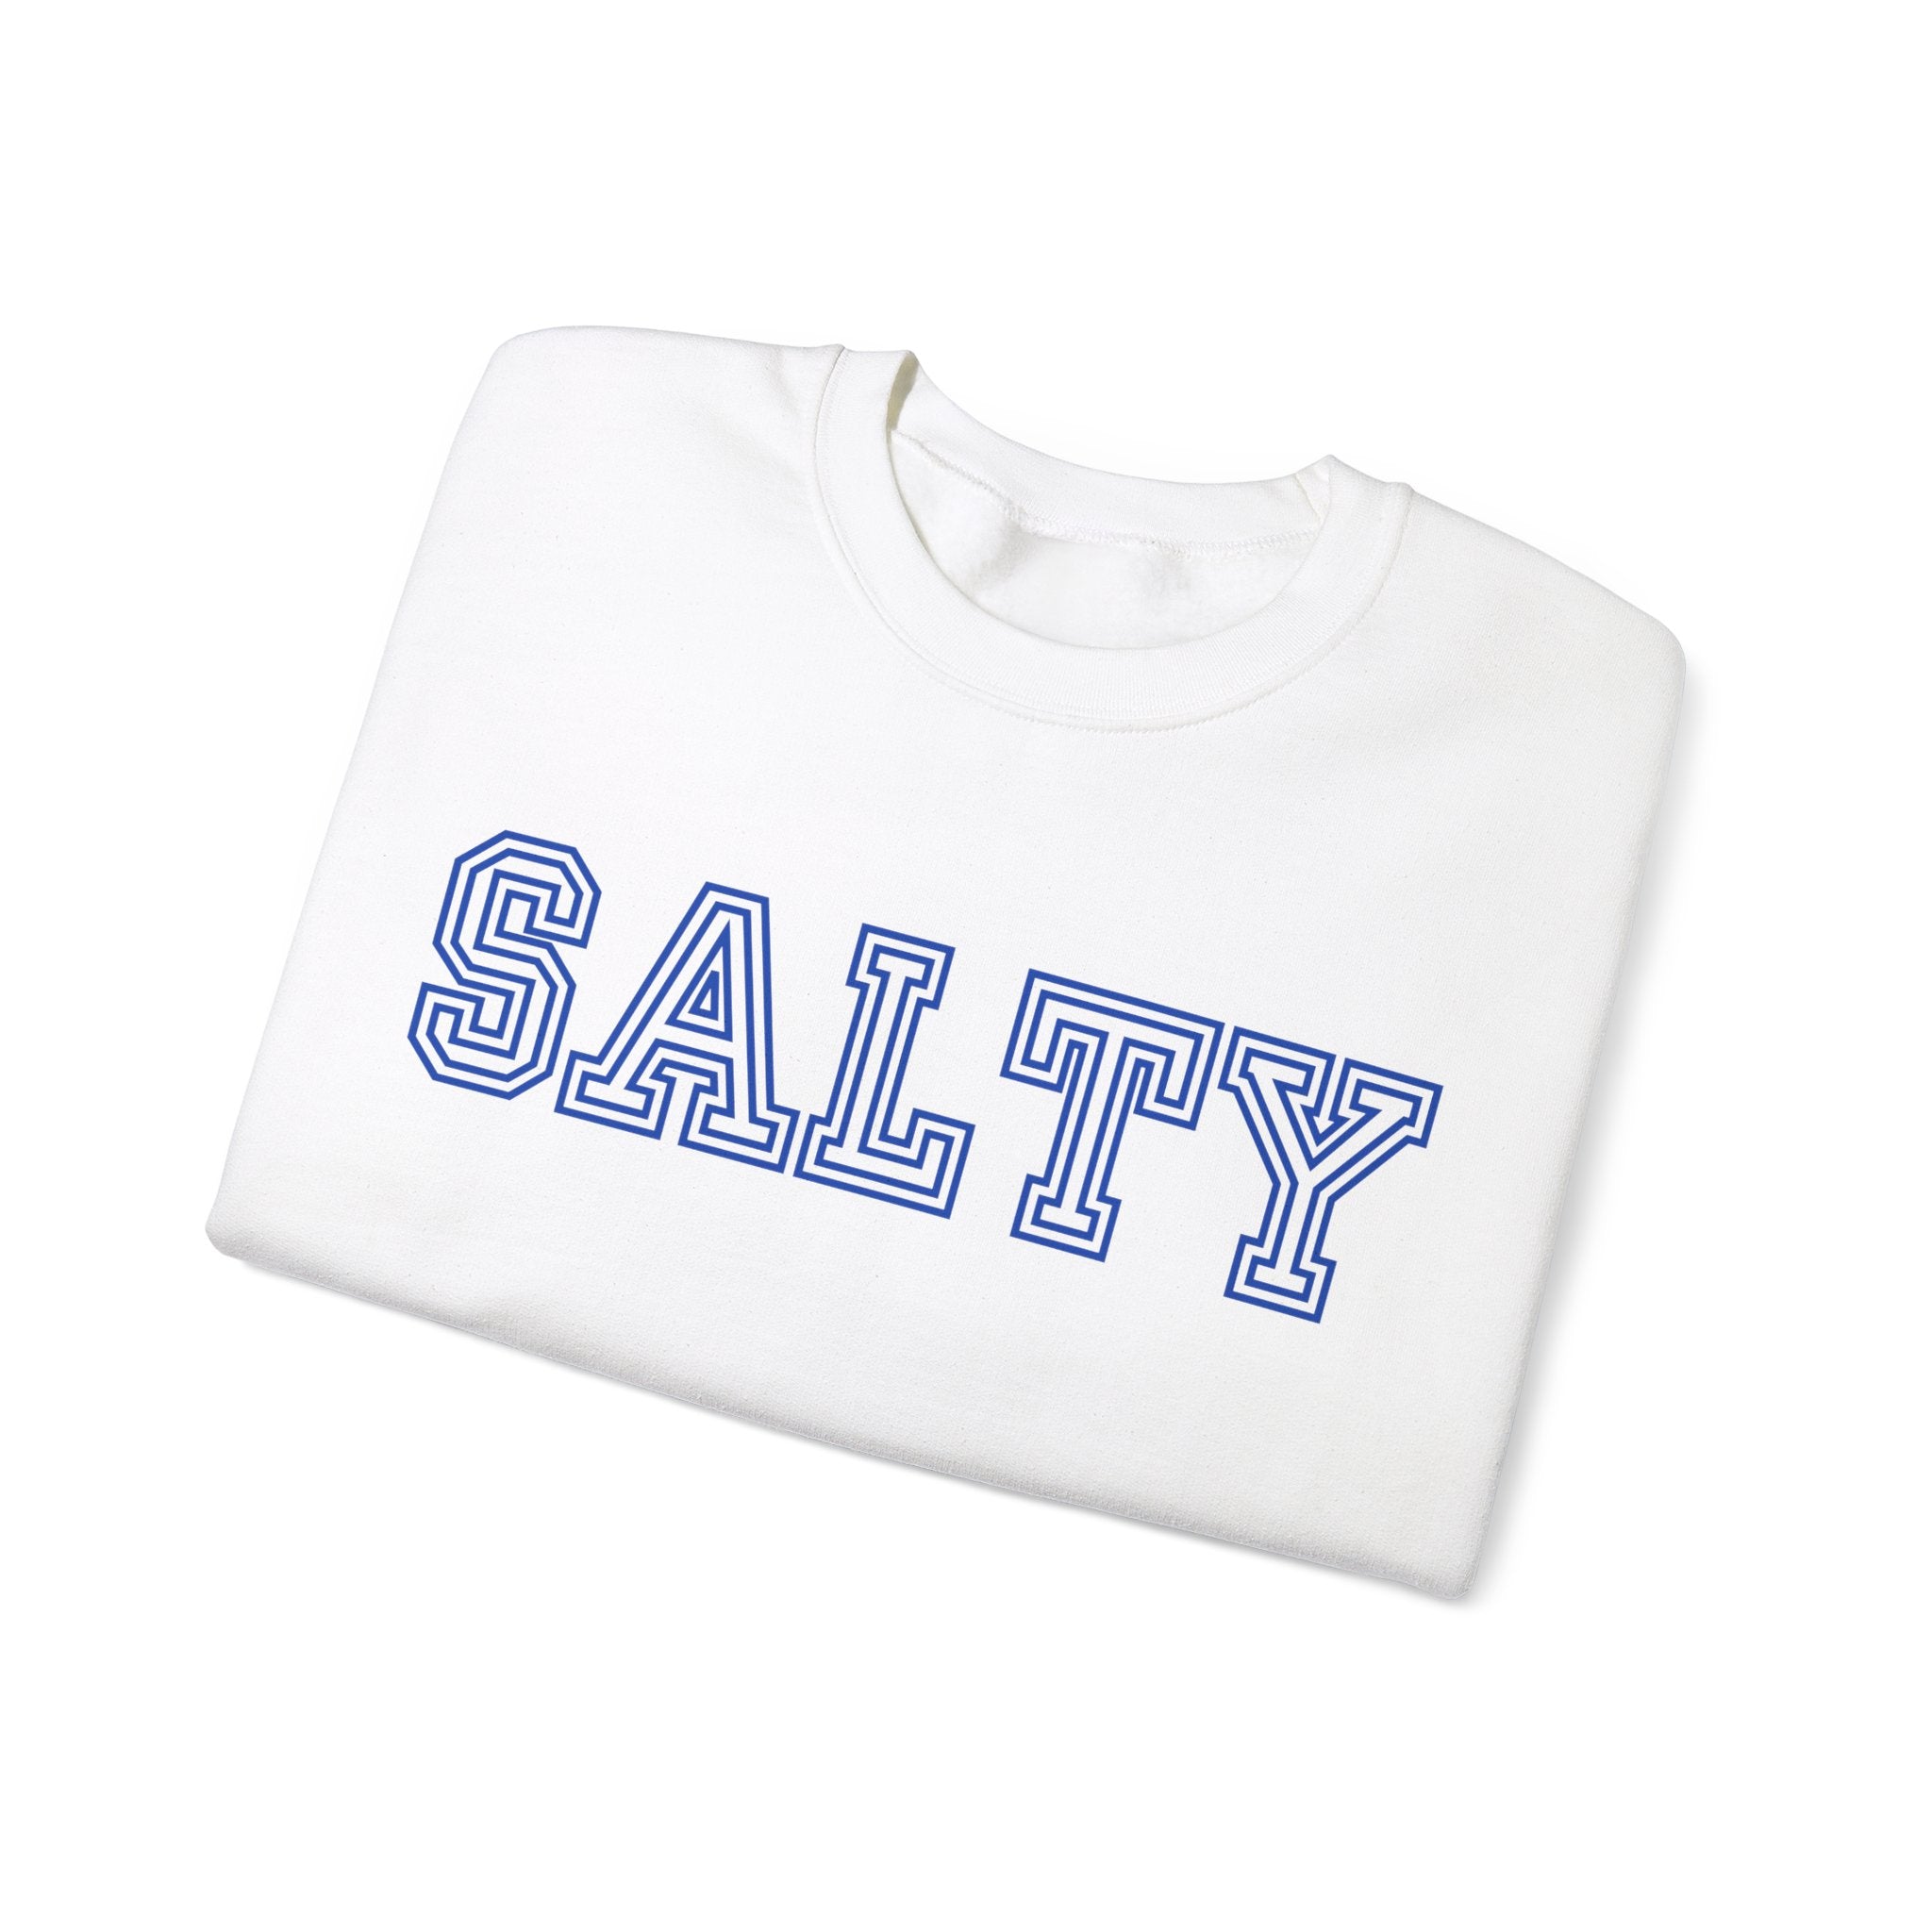 SALTY Unisex Heavy Blend™ Crewneck Sweatshirt